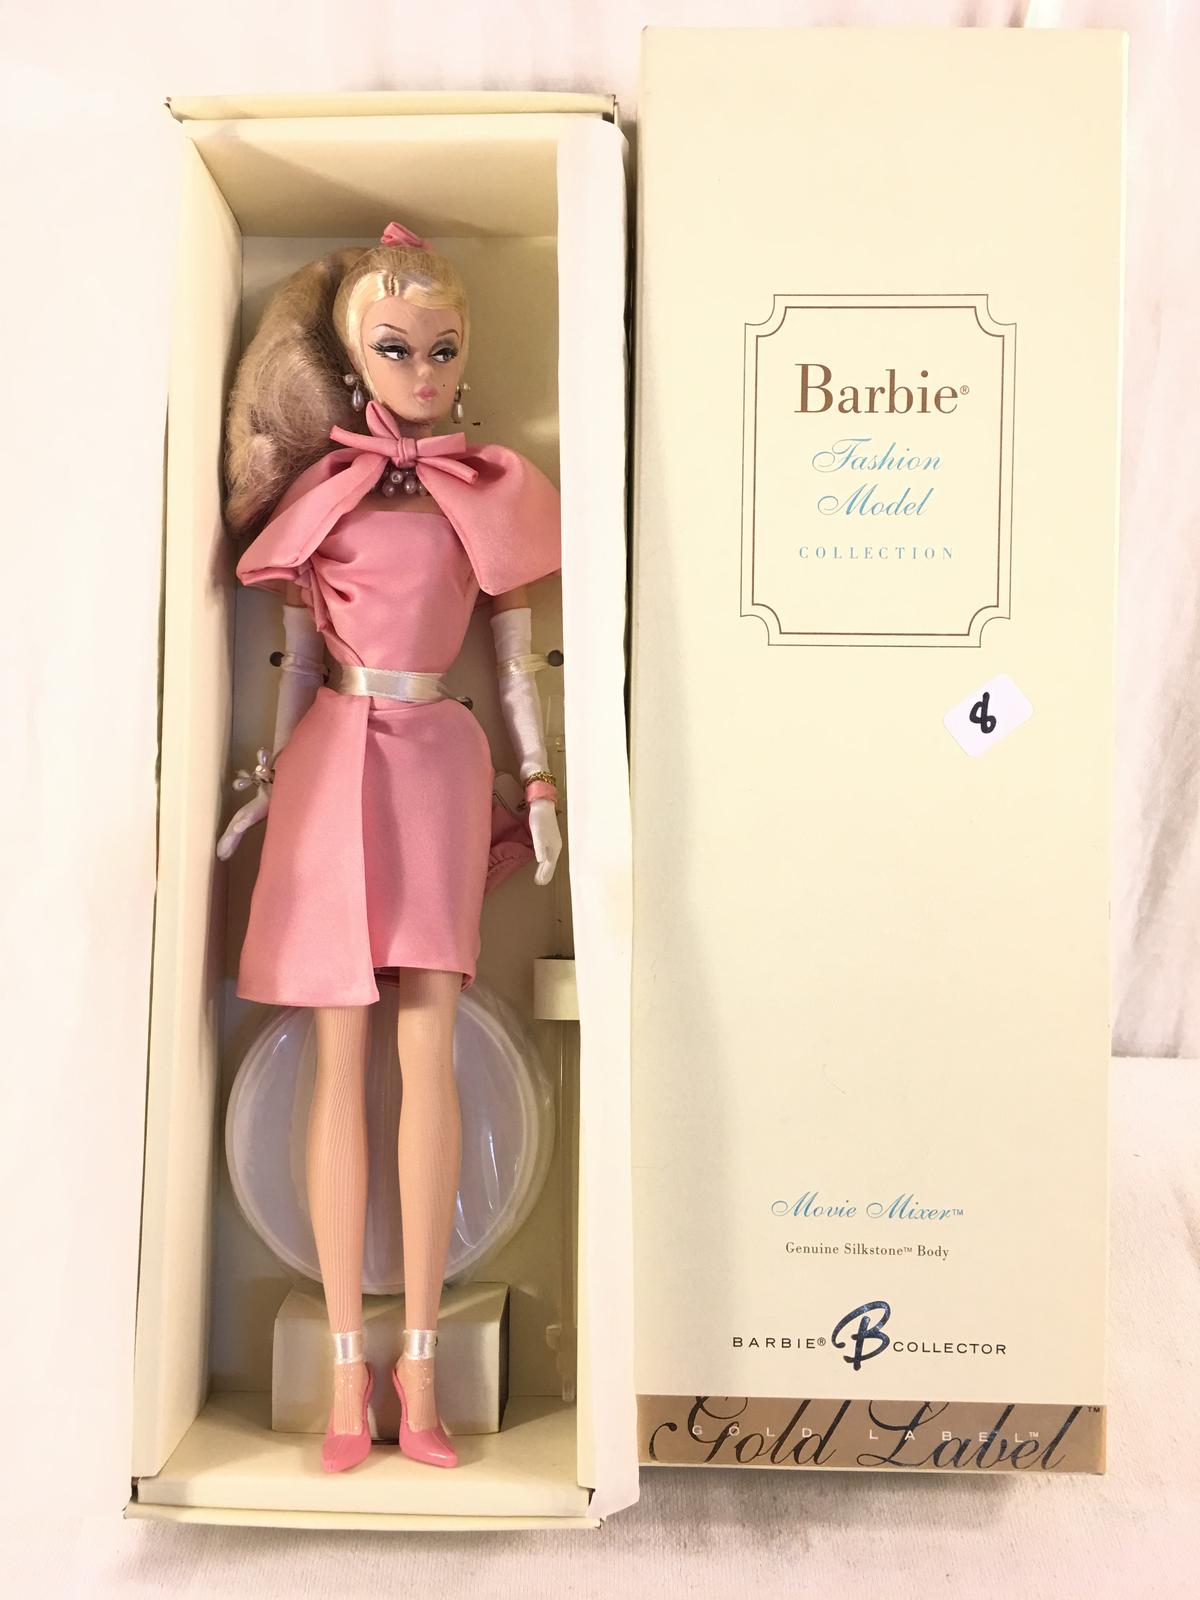 NIB Collector Genuine Silkstone Body Gold Label "Movie Mixer" Fashion Model Barbie Doll Box: 13.5"x4